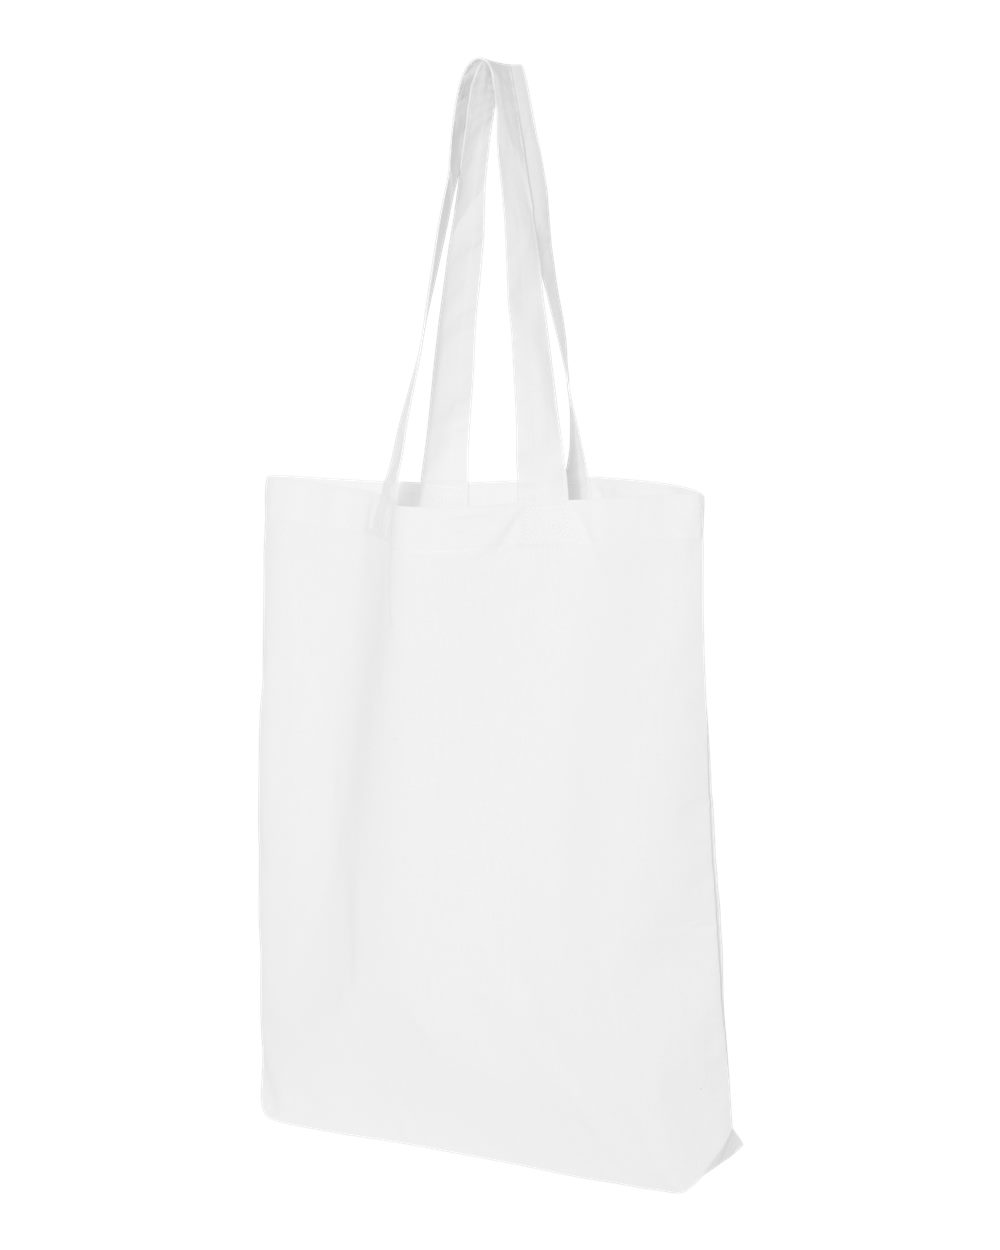 6oz Natural Tote Bag At Wholesale Pricing | Cotton Creations